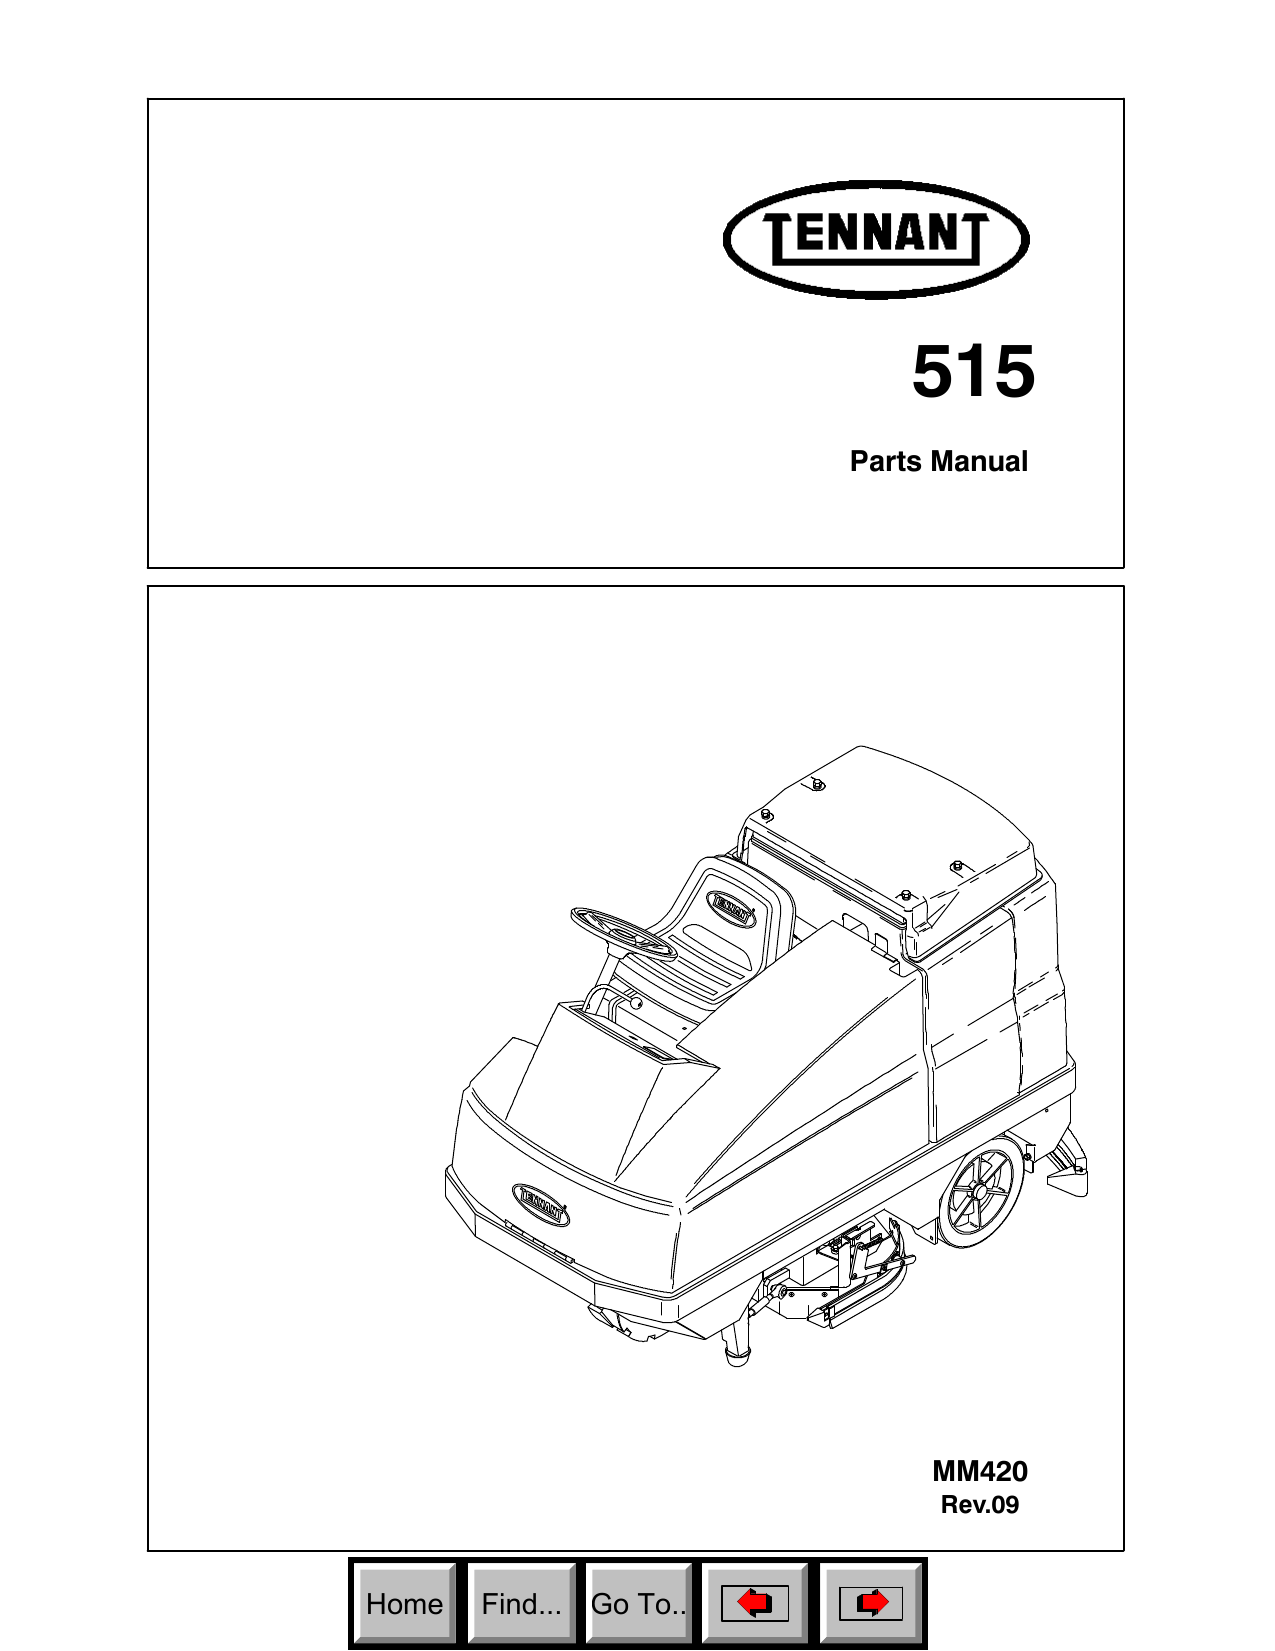 Tennant 515 Part Manual Manualzz